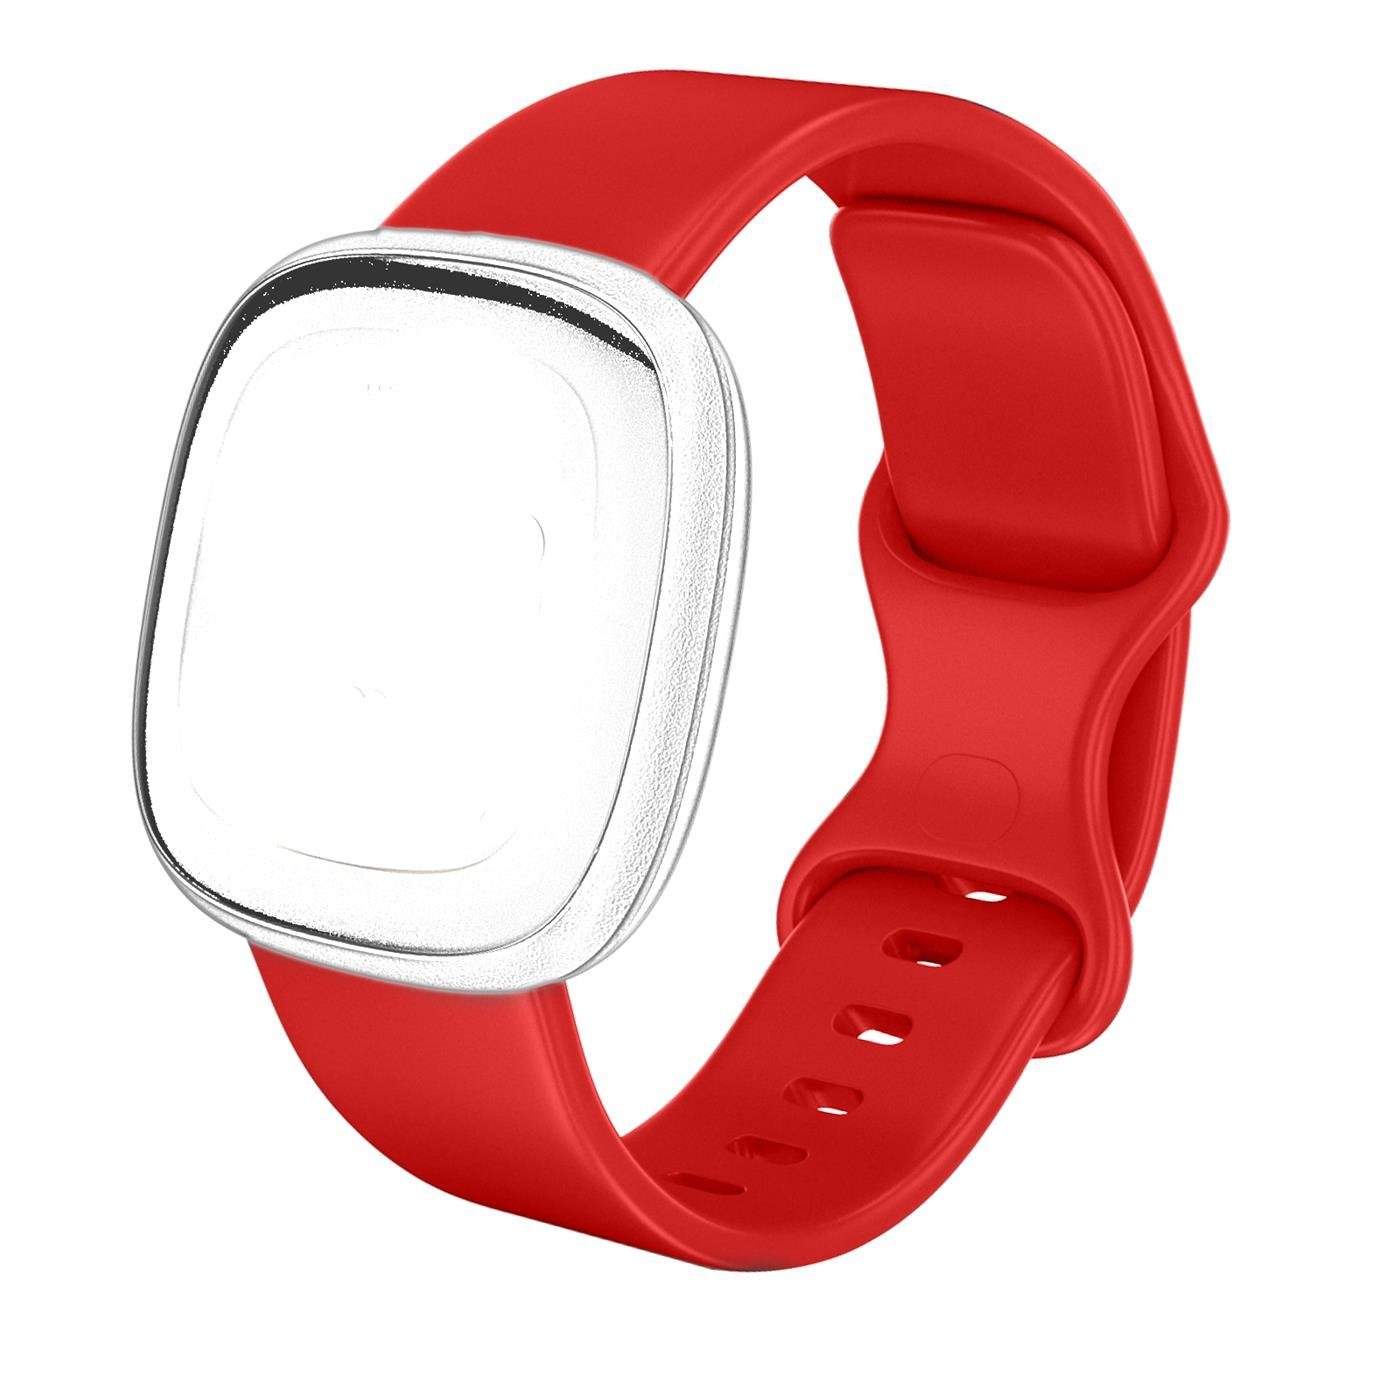 CoolGadget Smartwatch-Armband Fitnessarmband aus TPU / Silikon, für Fitbit Versa 3 / 4 Sport Uhrenarmband Fitness Band Unisex Größe S